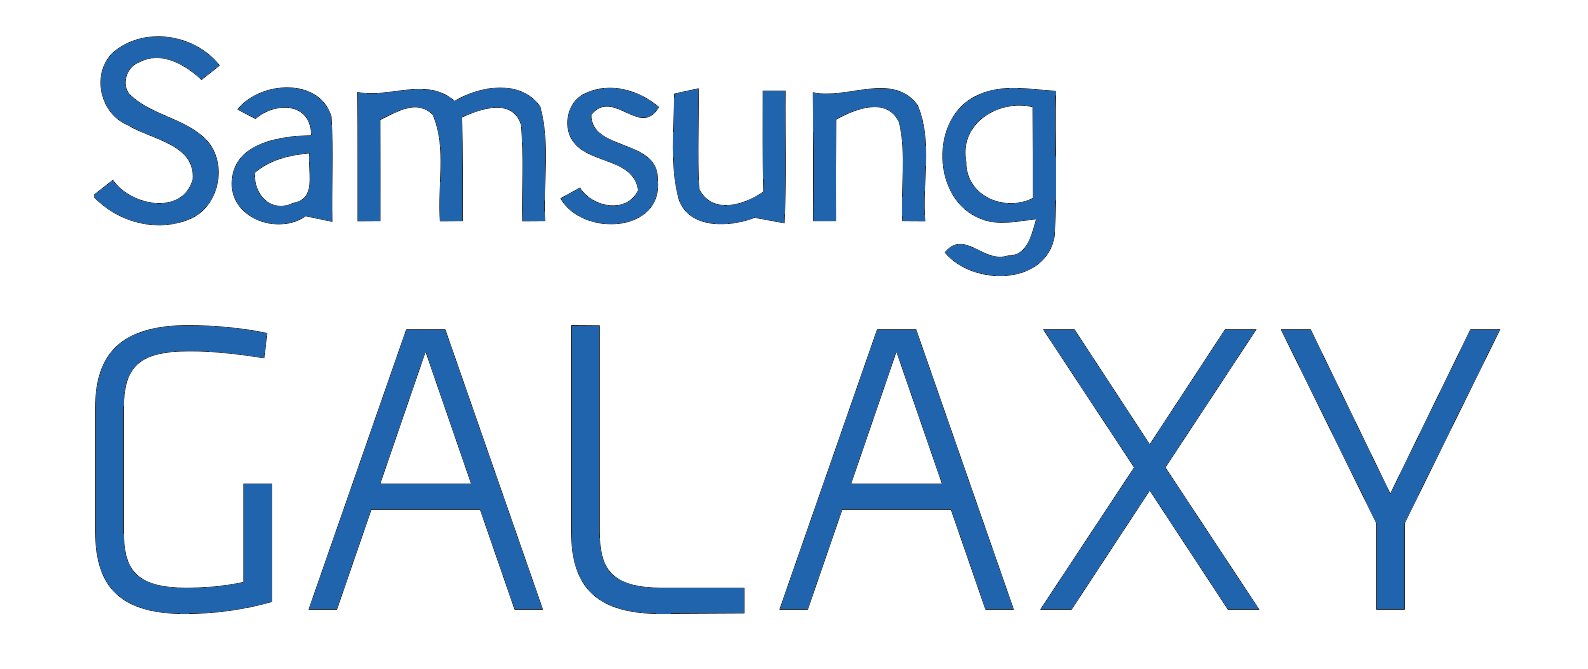 Samsung Smartphone Logo - The Latest Samsung Bixby The A.I Assistant To Rival IOS Siri. Kara